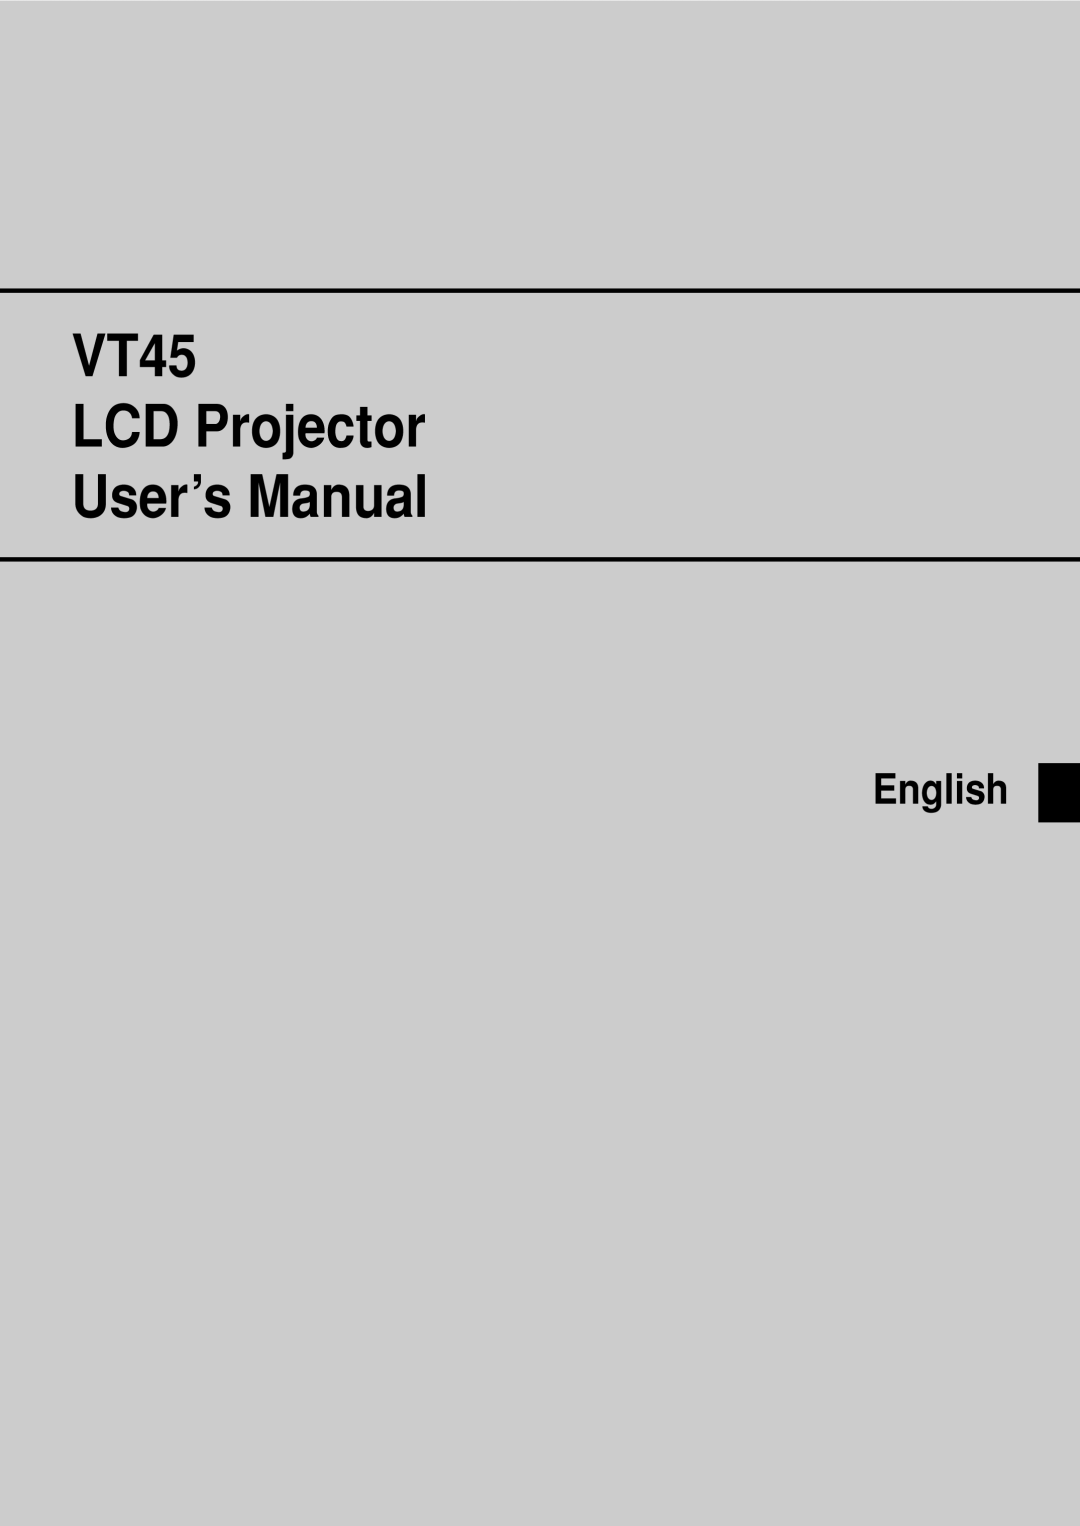 NEC user manual VT45 LCD Projector User’s Manual, English 